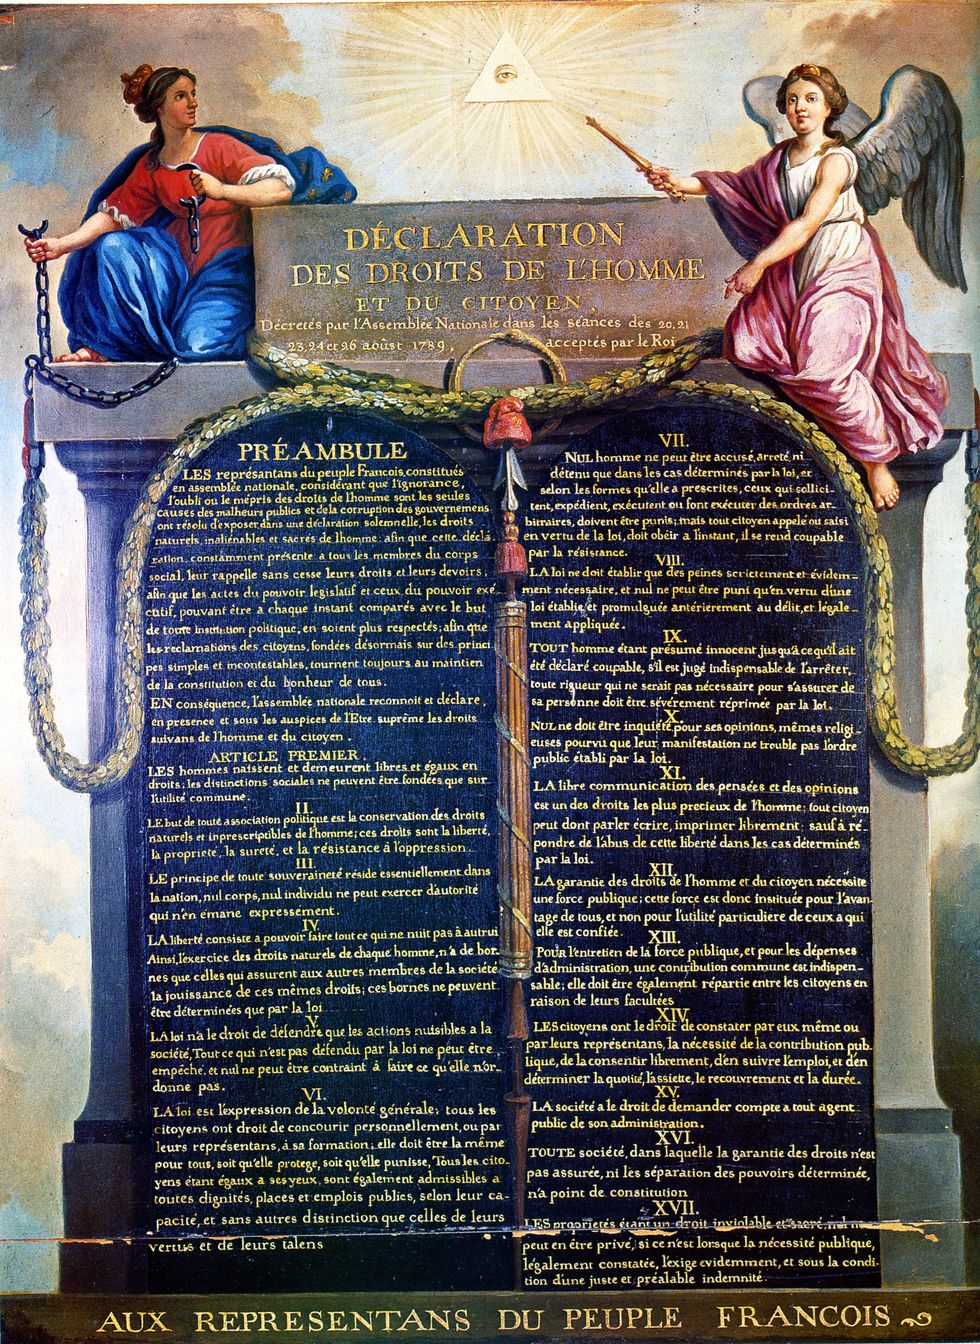 Appreciation for the Declaration Des Droits